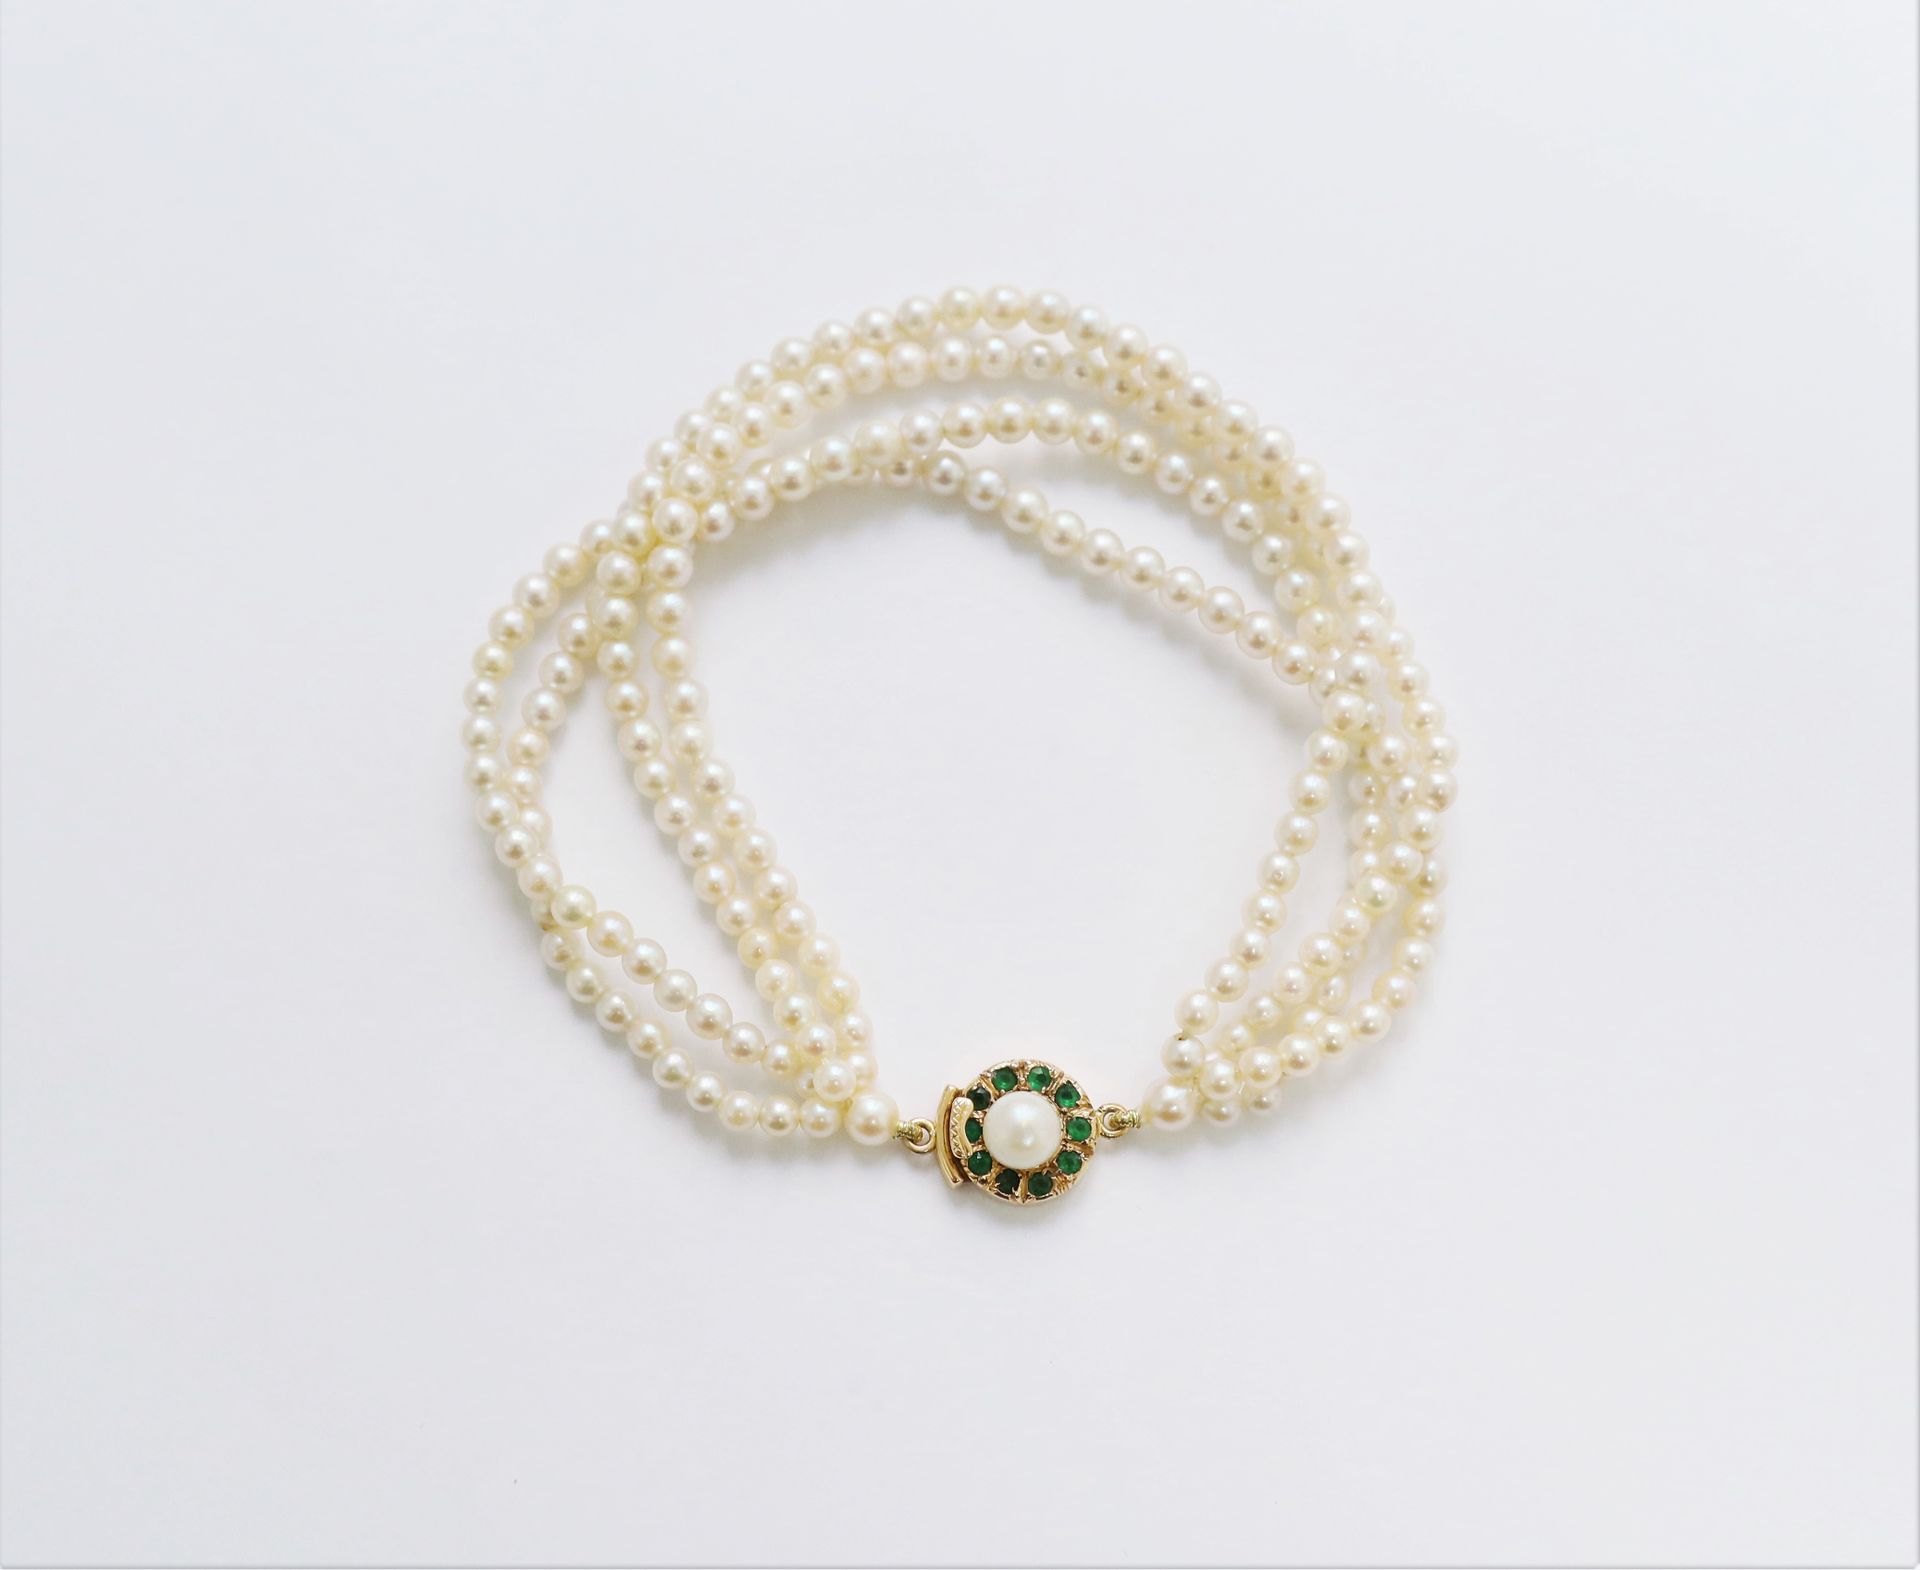 Null 手链有4排小的养殖珍珠，18K（750）金的扣子上镶嵌着一颗养殖珍珠，周围有祖母绿。长度：21厘米左右。毛重：19.1克（芯片